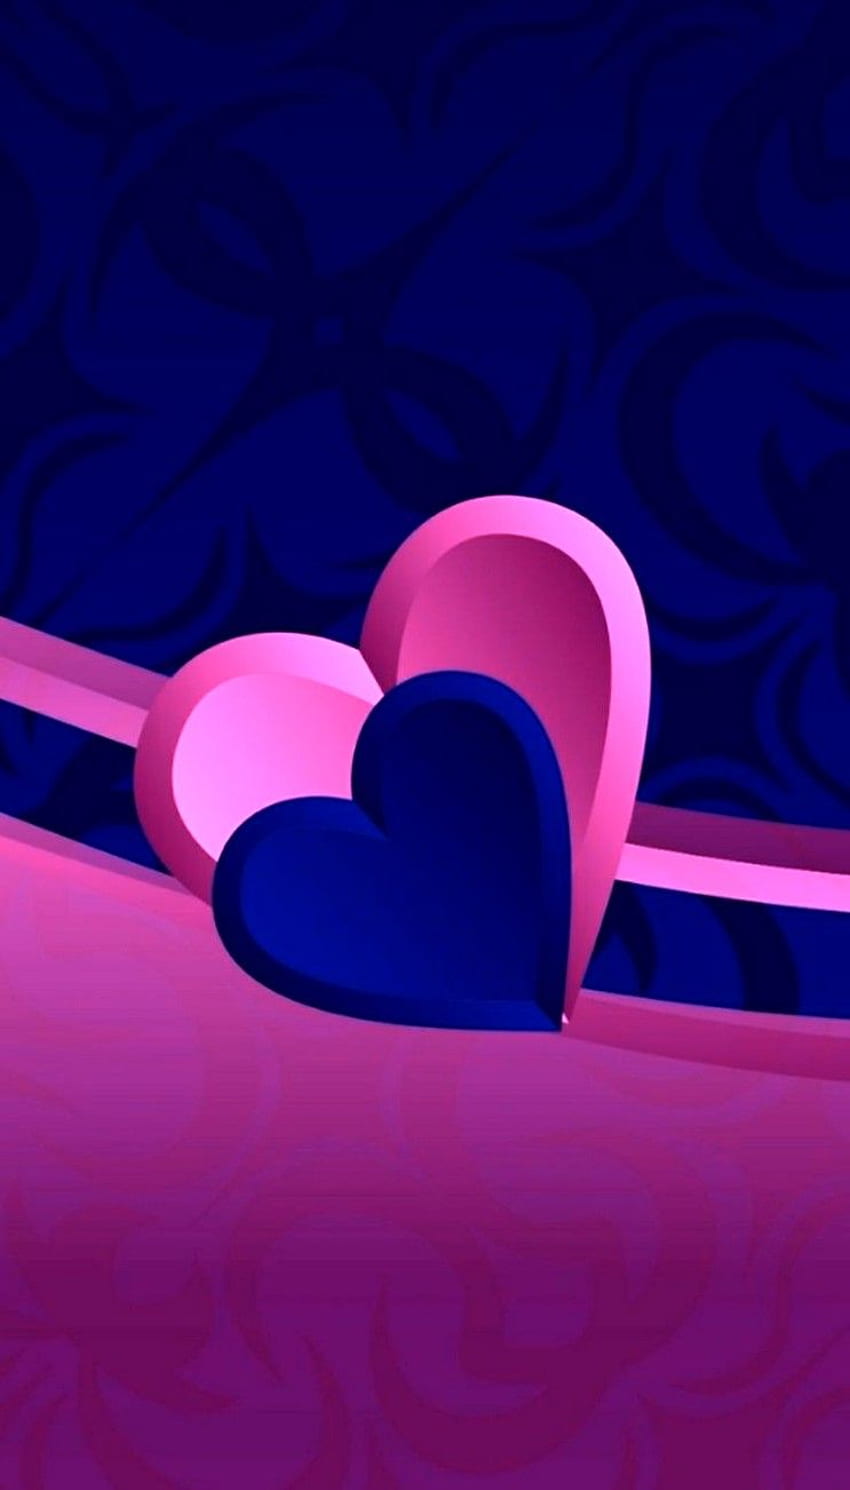 Neon Lights Love Heart Tunnel Background Video 💙 Blue Heart Moving  Background Video Loop [4 Hours] - YouTube